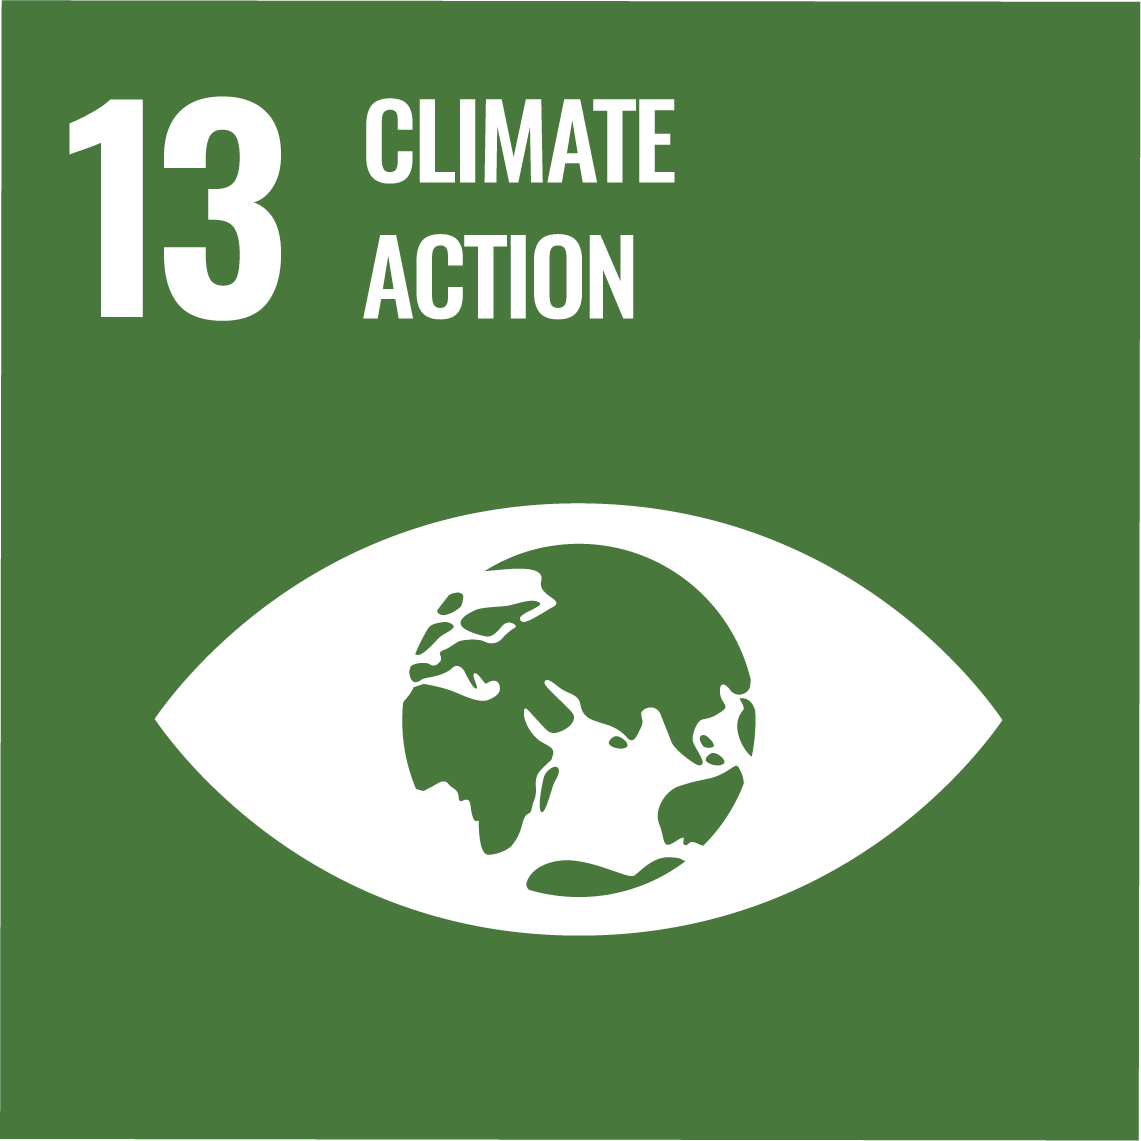 Sustainable Development Goals 13 - Climate action